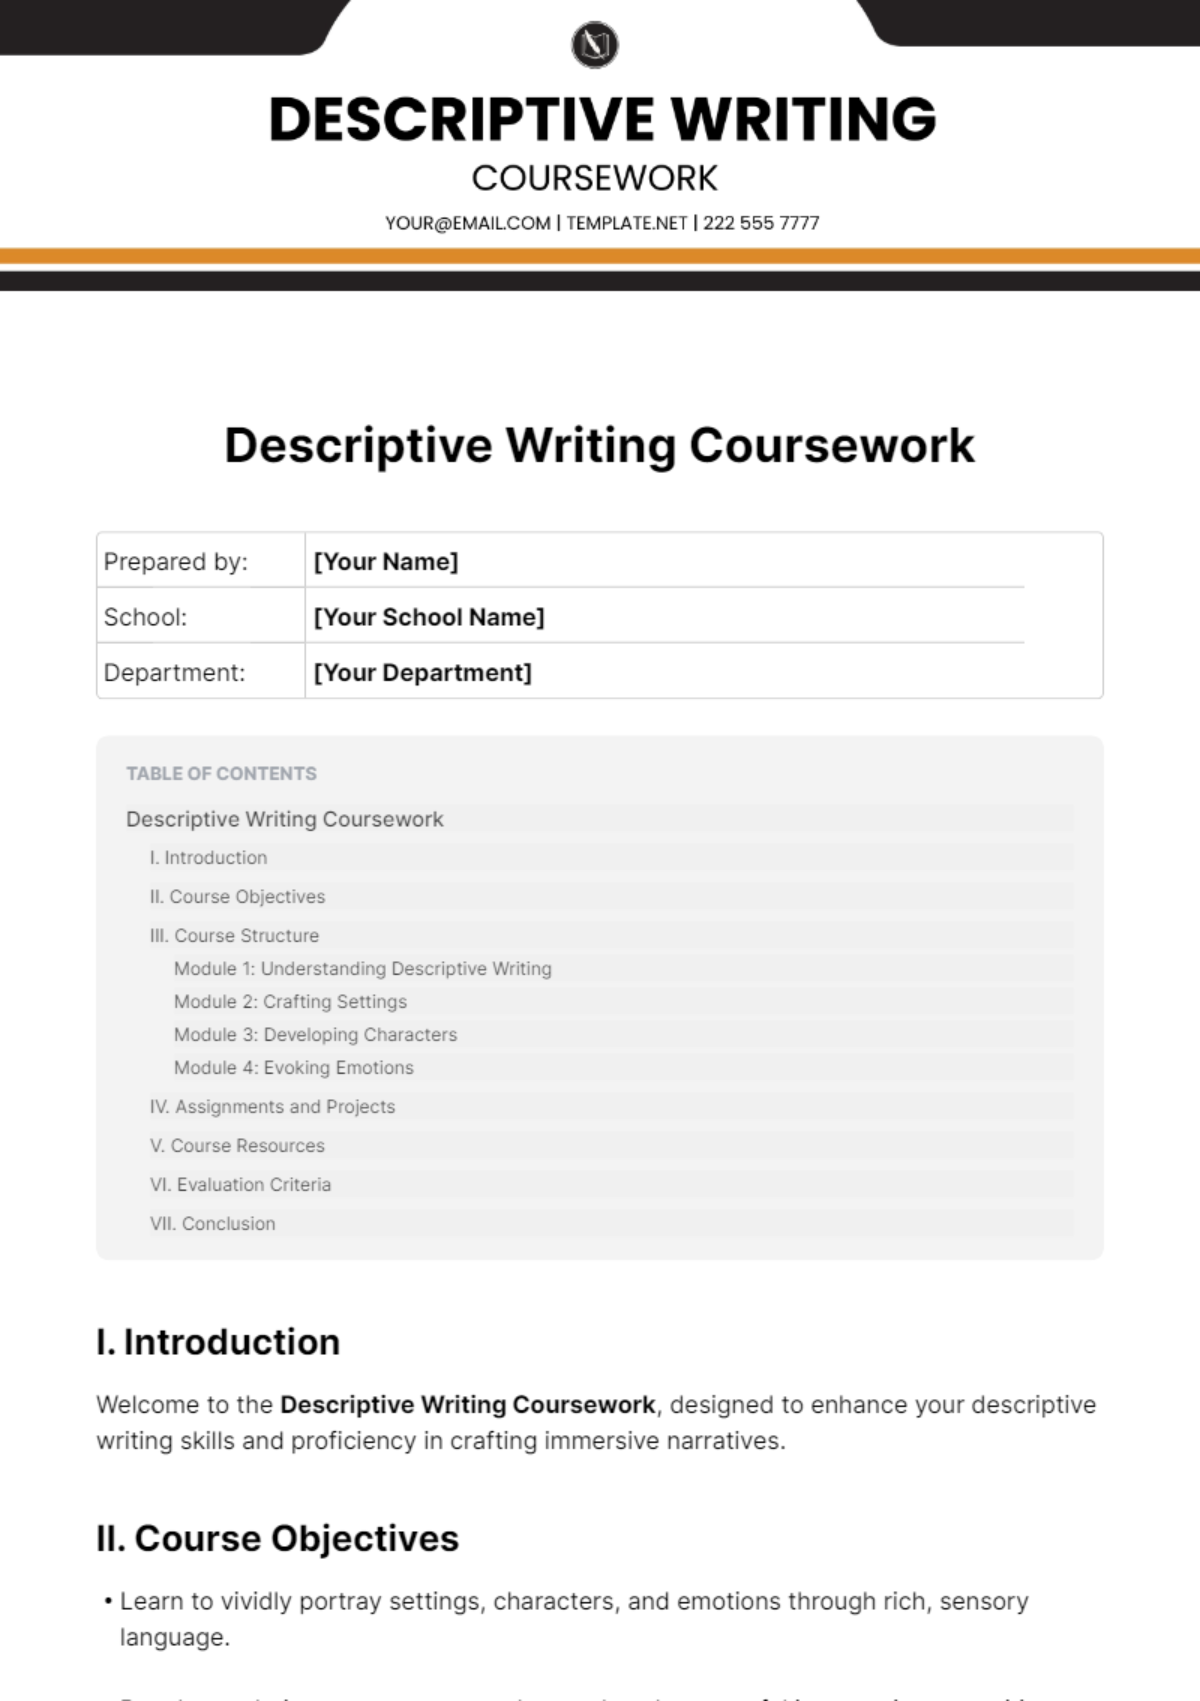 Descriptive Writing Coursework Template